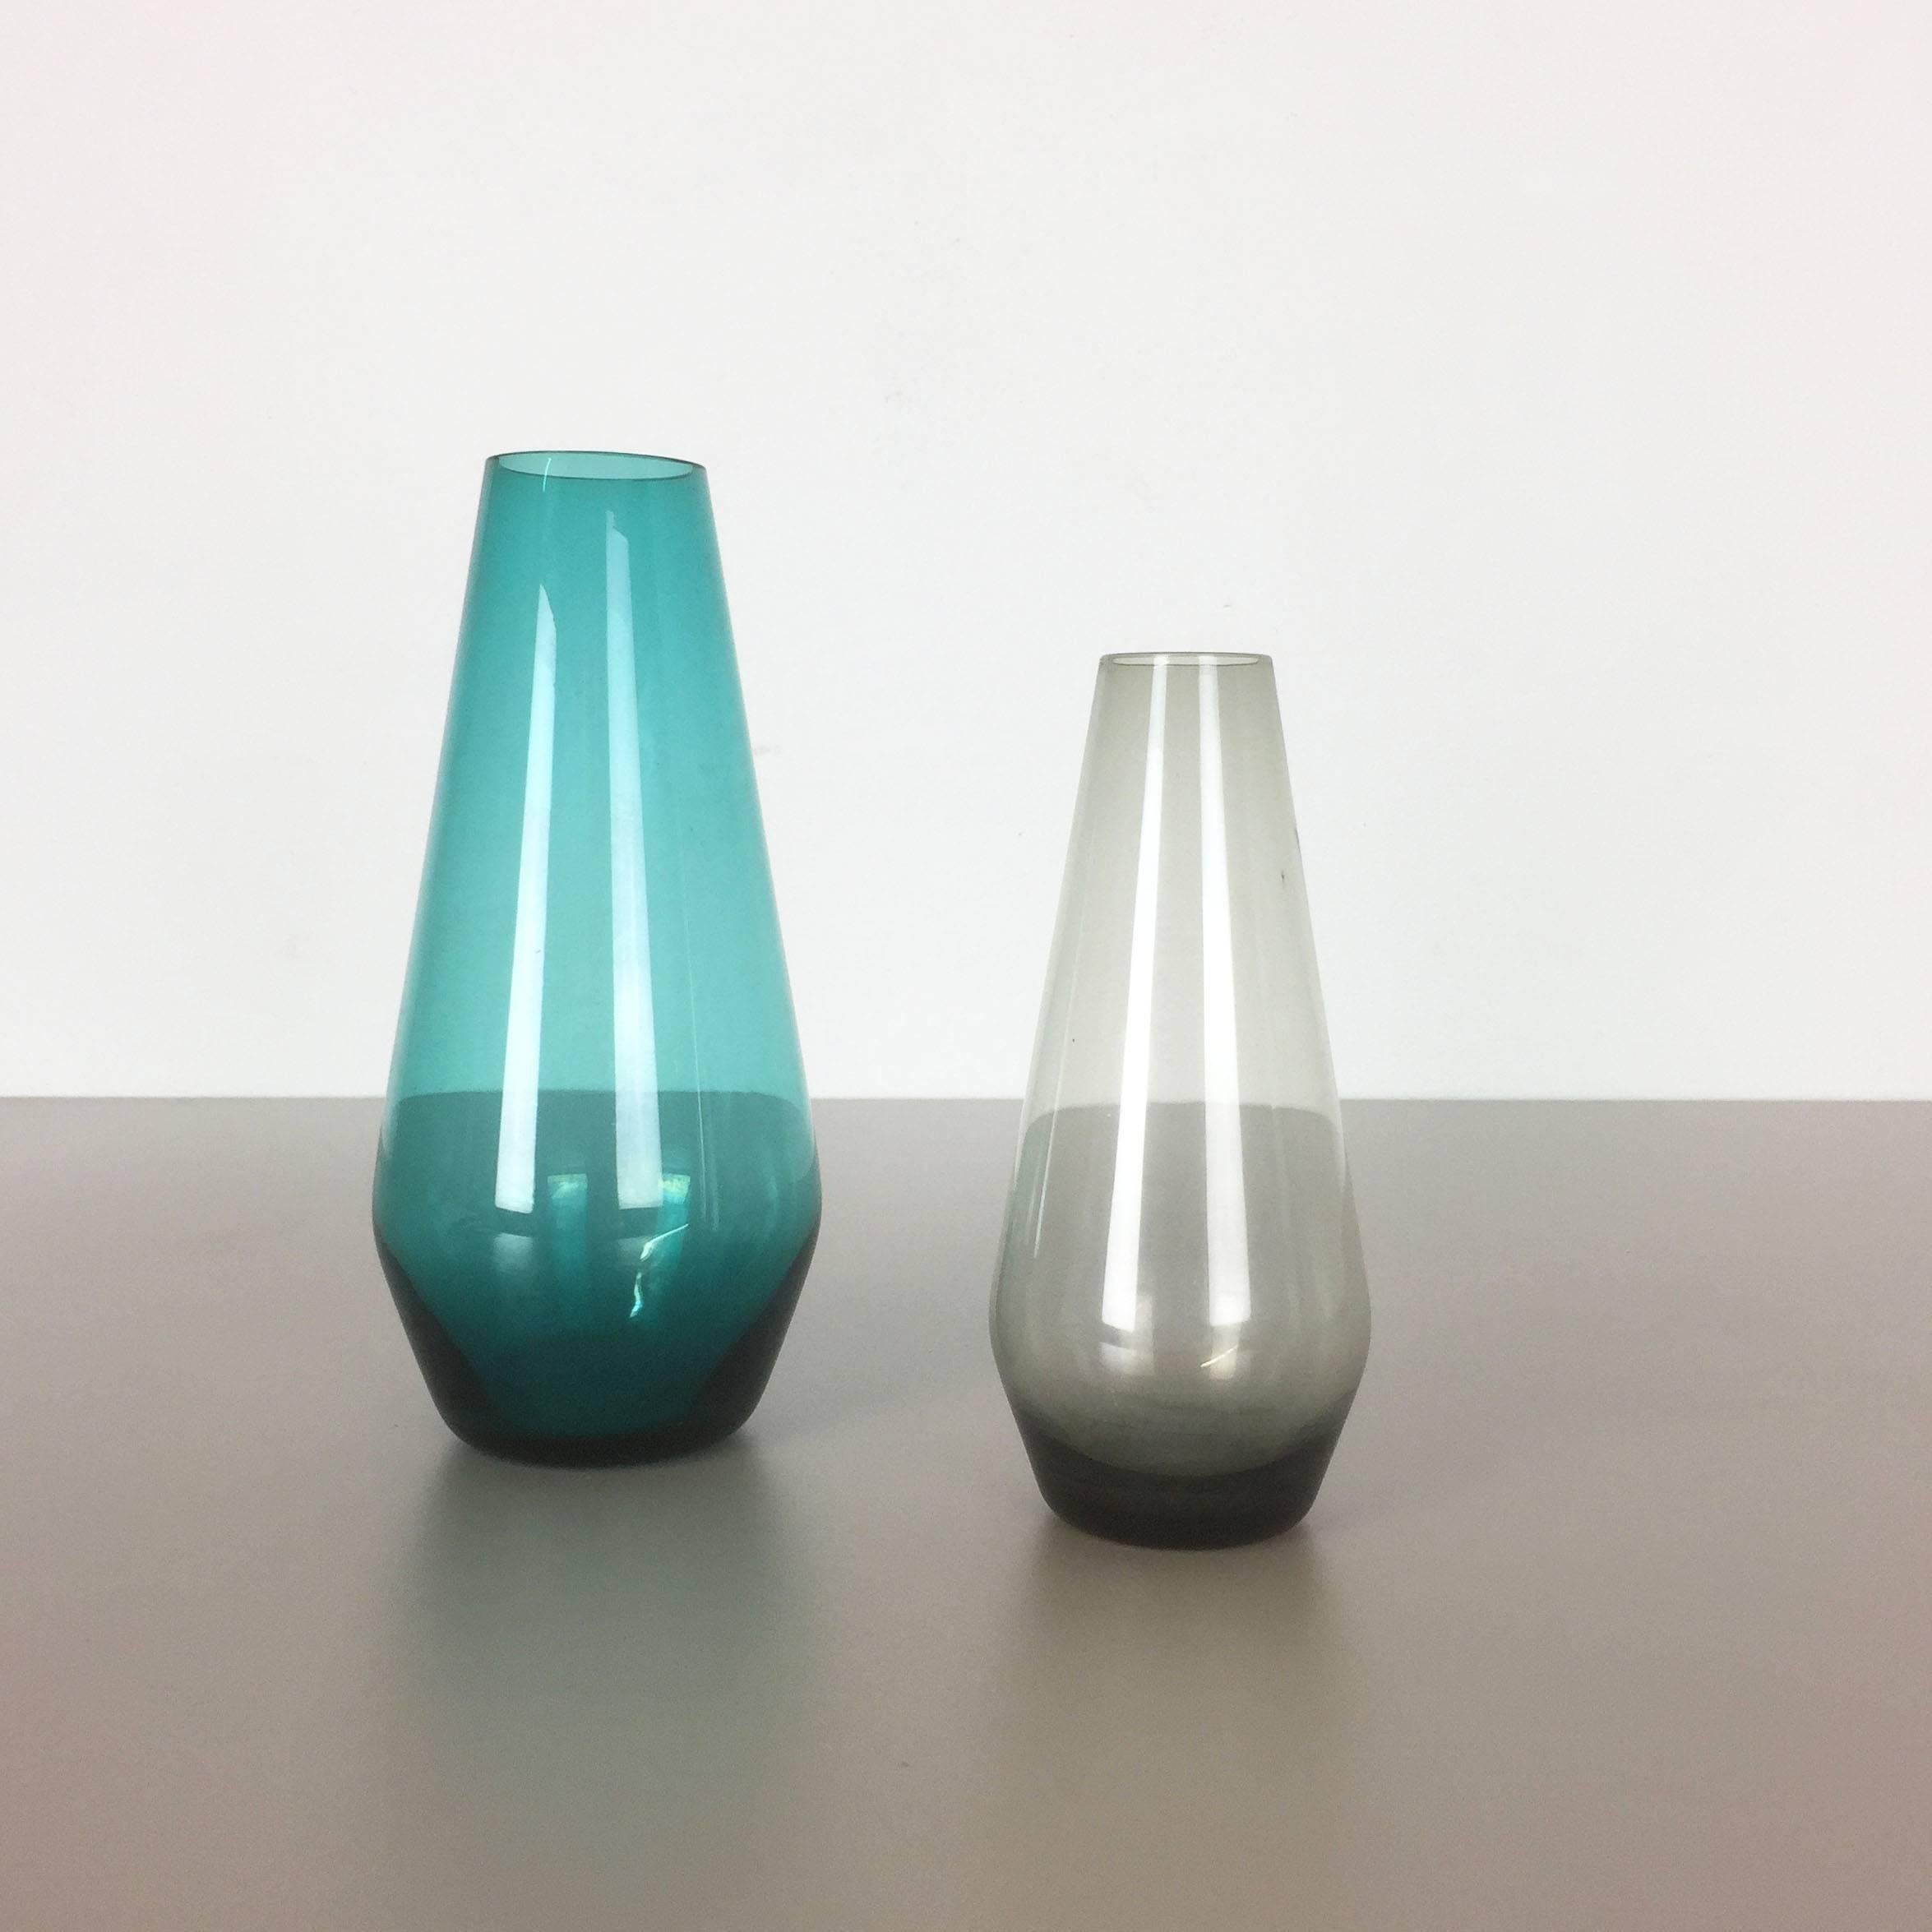 Vintage 1960s Set of Two Turmalin Vases by Wilhelm Wagenfeld for WMF, Germany (Moderne der Mitte des Jahrhunderts)